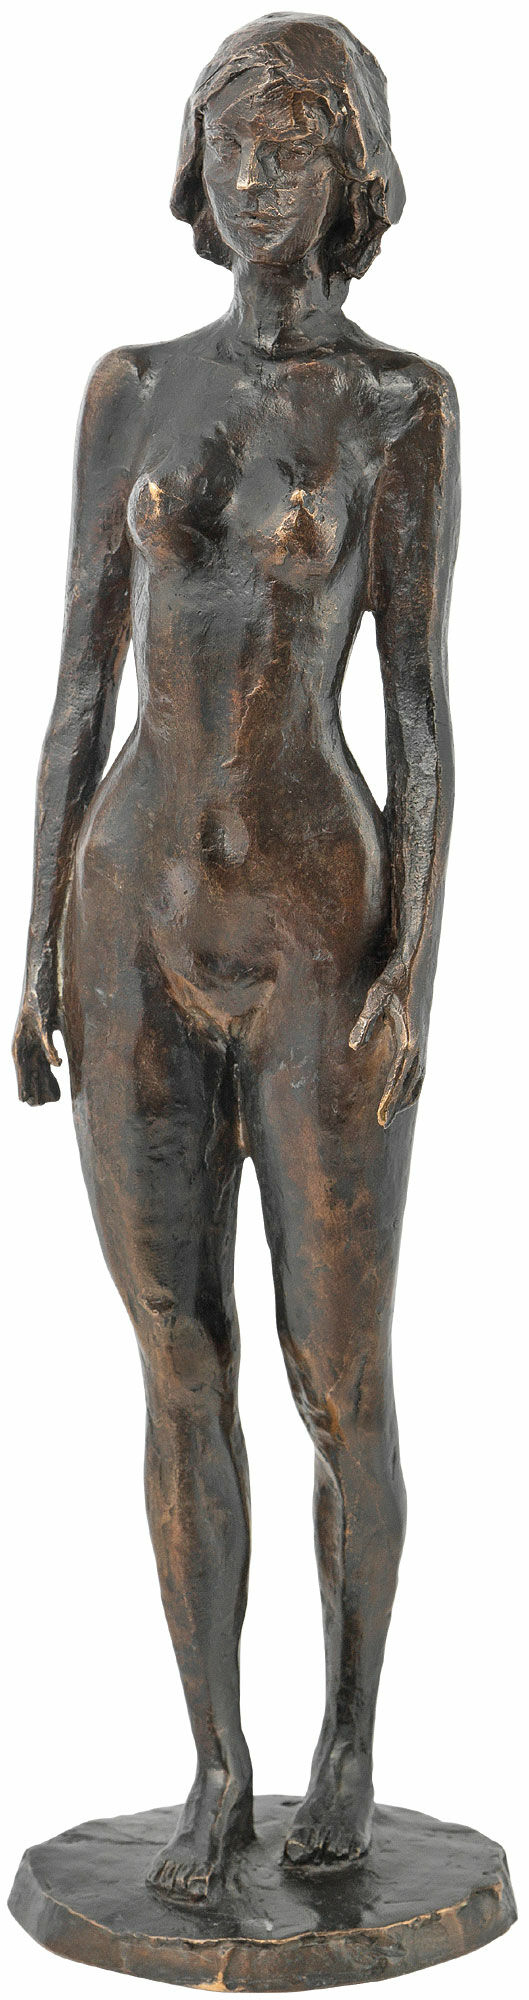 Sculpture "Perfume" (2014), bronze by Serge Mangin